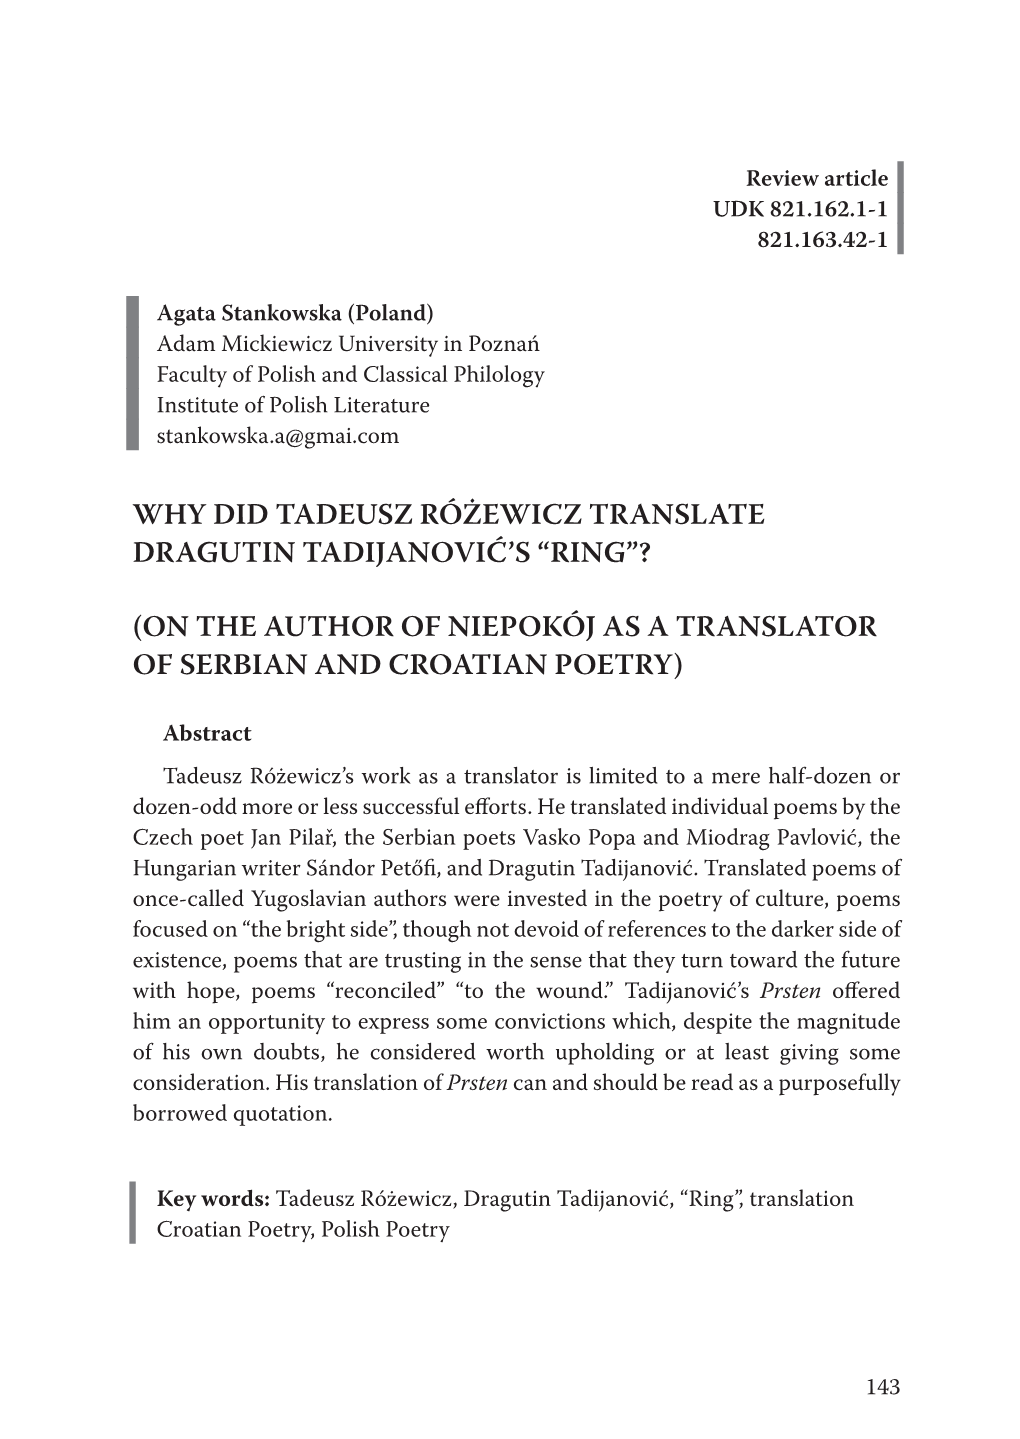 Why Did Tadeusz Różewicz Translate Dragutin Tadijanović’S “Ring”?